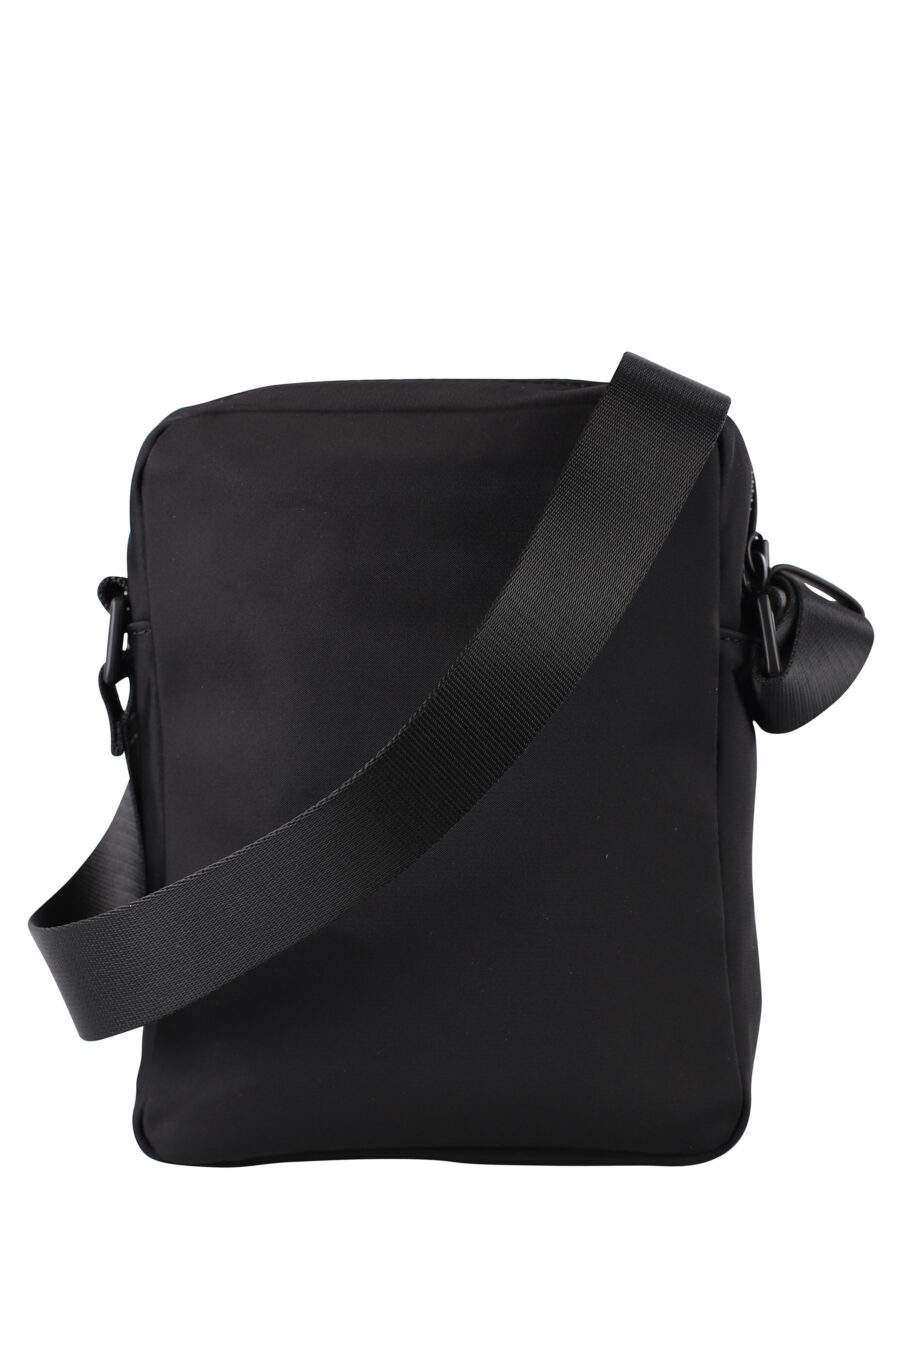 Black shoulder bag with white "icon" logo - IMG 1306